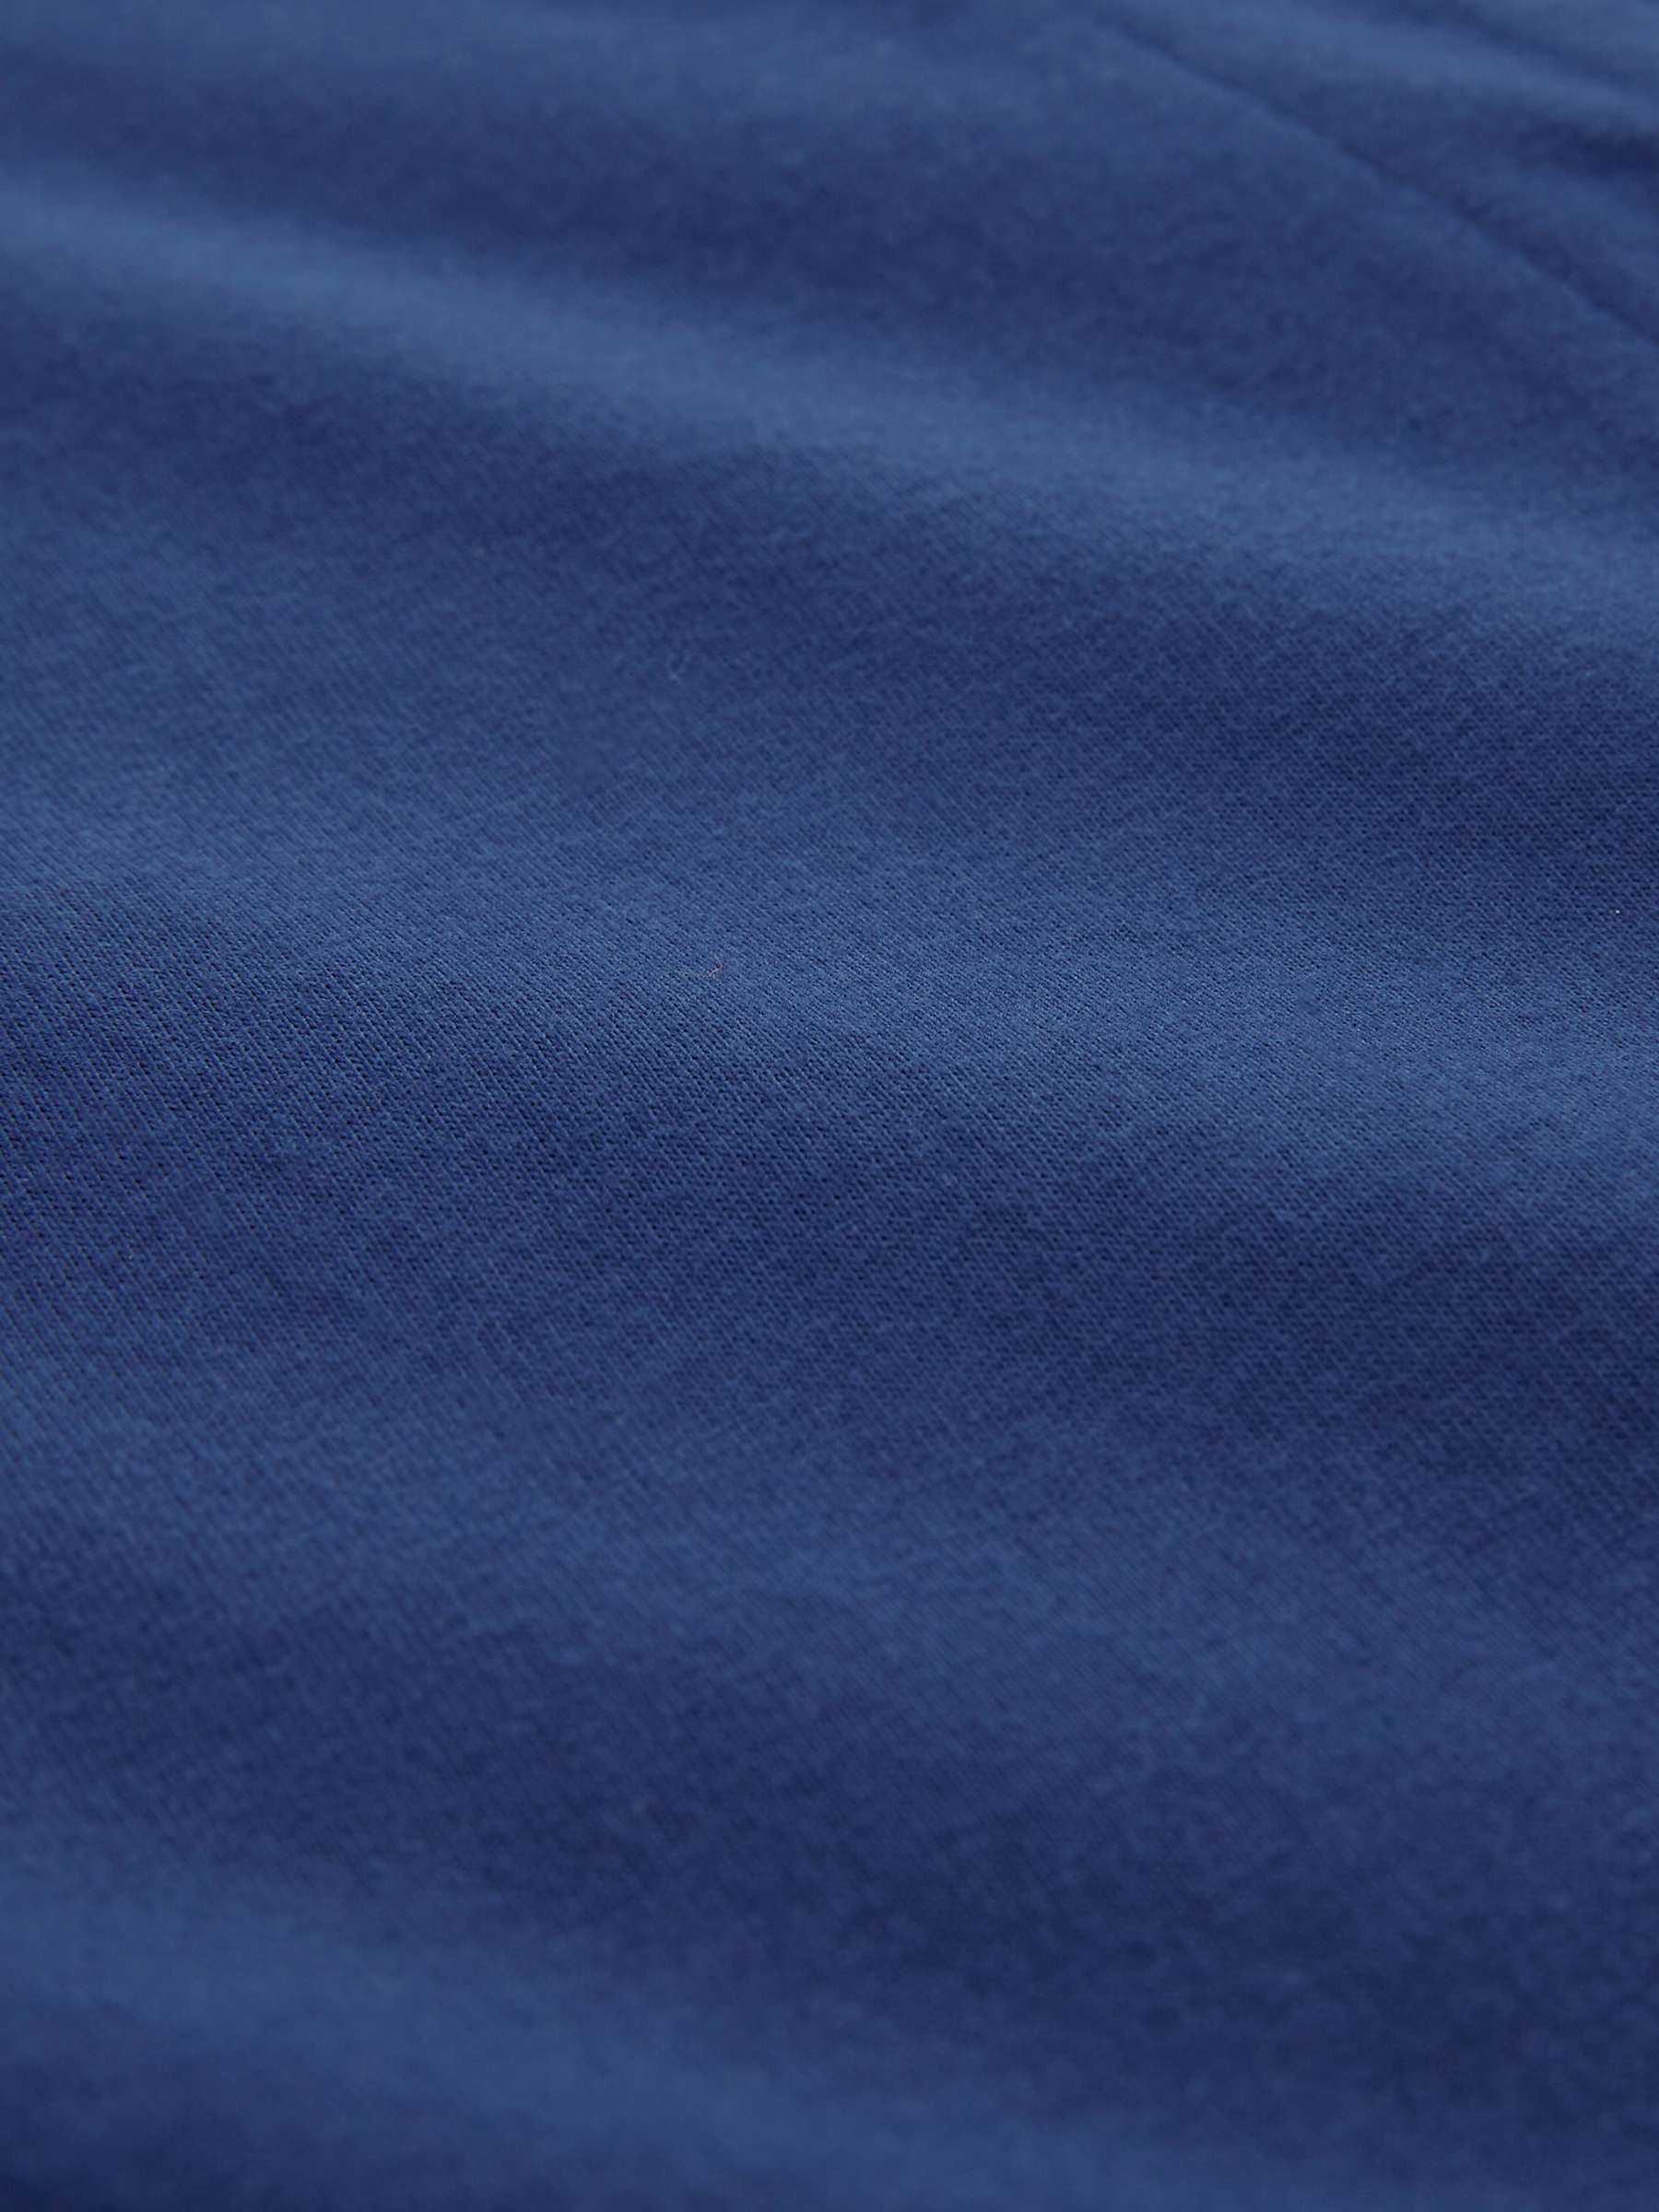 Buy Celtic & Co. Organic Cotton Button Short Sleeve Jersey Top, Blue Online at johnlewis.com